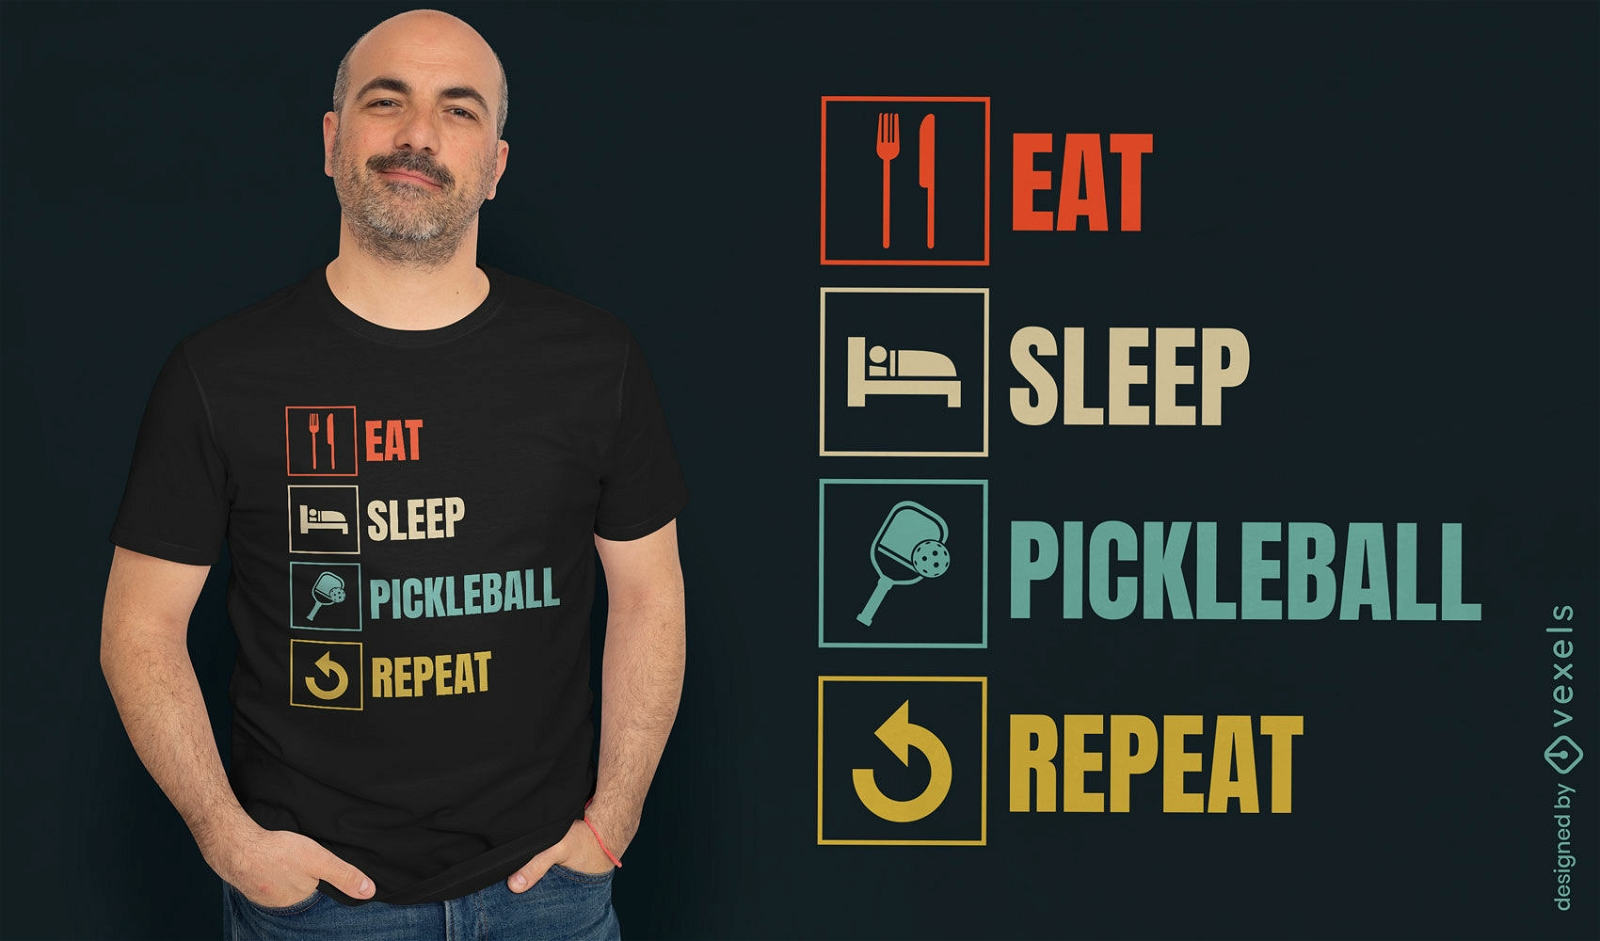 Pickleball routine t-shirt design